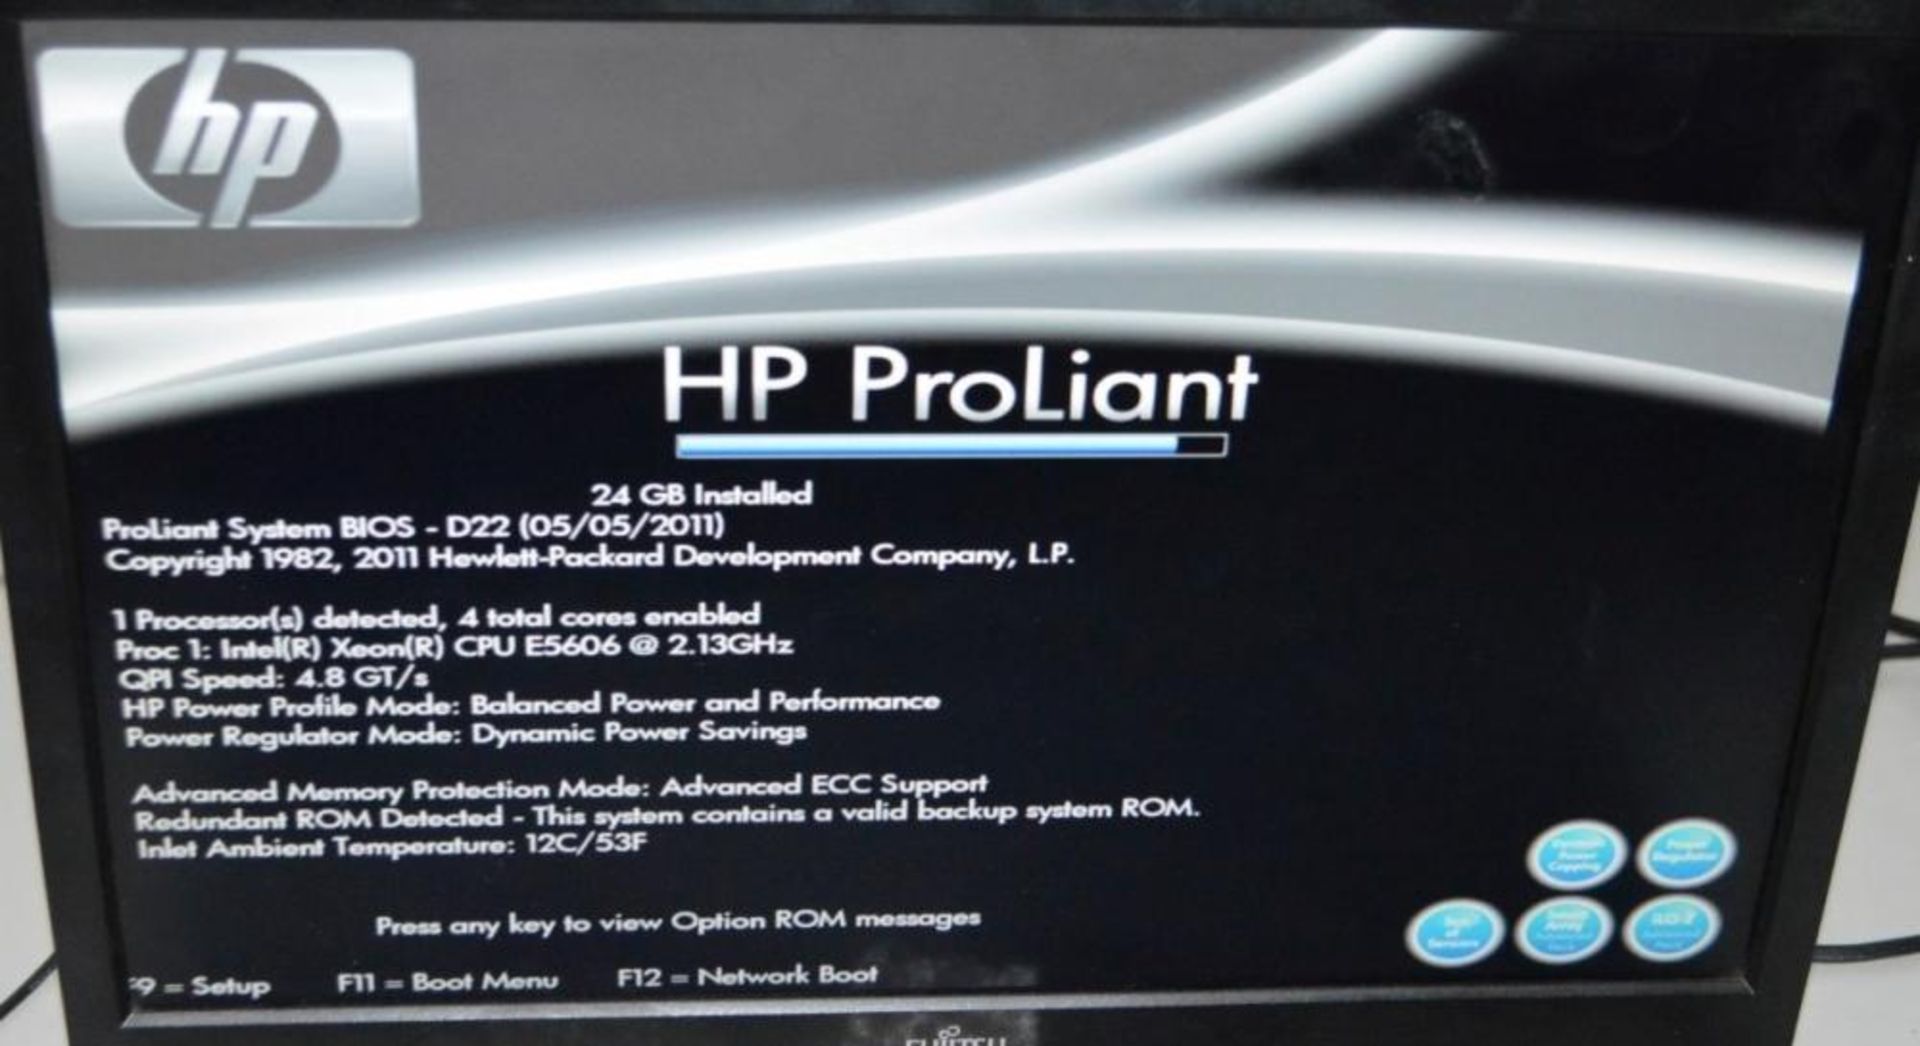 1 x HP Proliant ML350 G6 Server Intel Xeon E5606 2.13GHz 24GB RAM - Ref TP399 - CL394 - Location: Al - Image 2 of 4